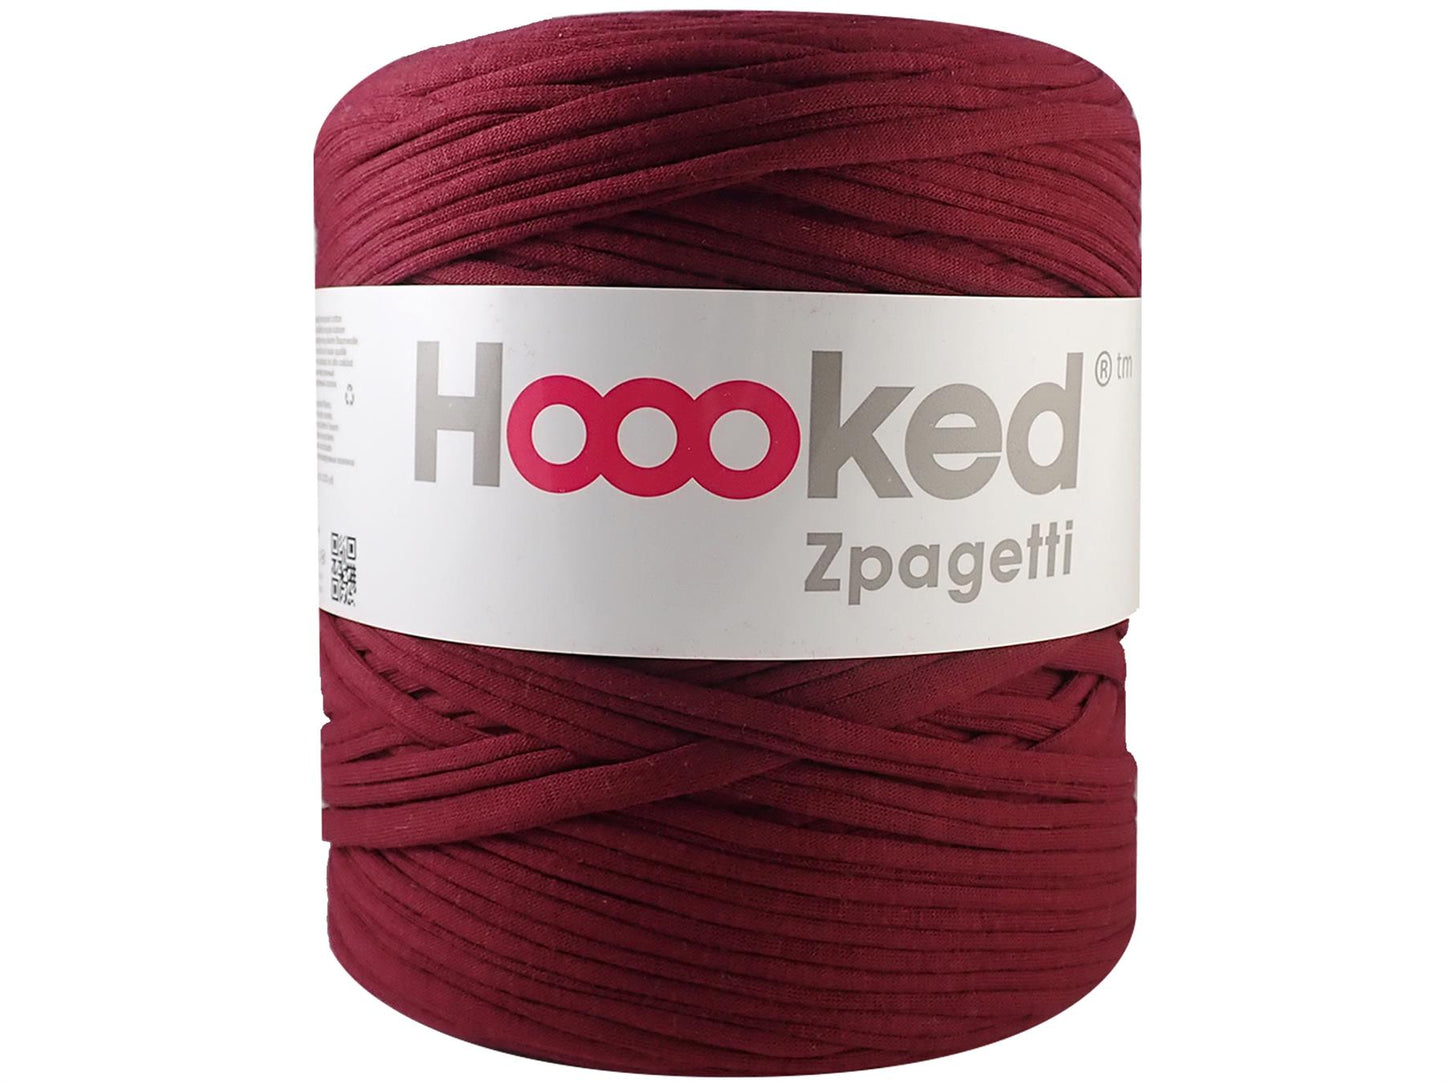 [Hoooked] Zpagetti Burgundy Red Cotton T-Shirt Yarn - 120M, 700g